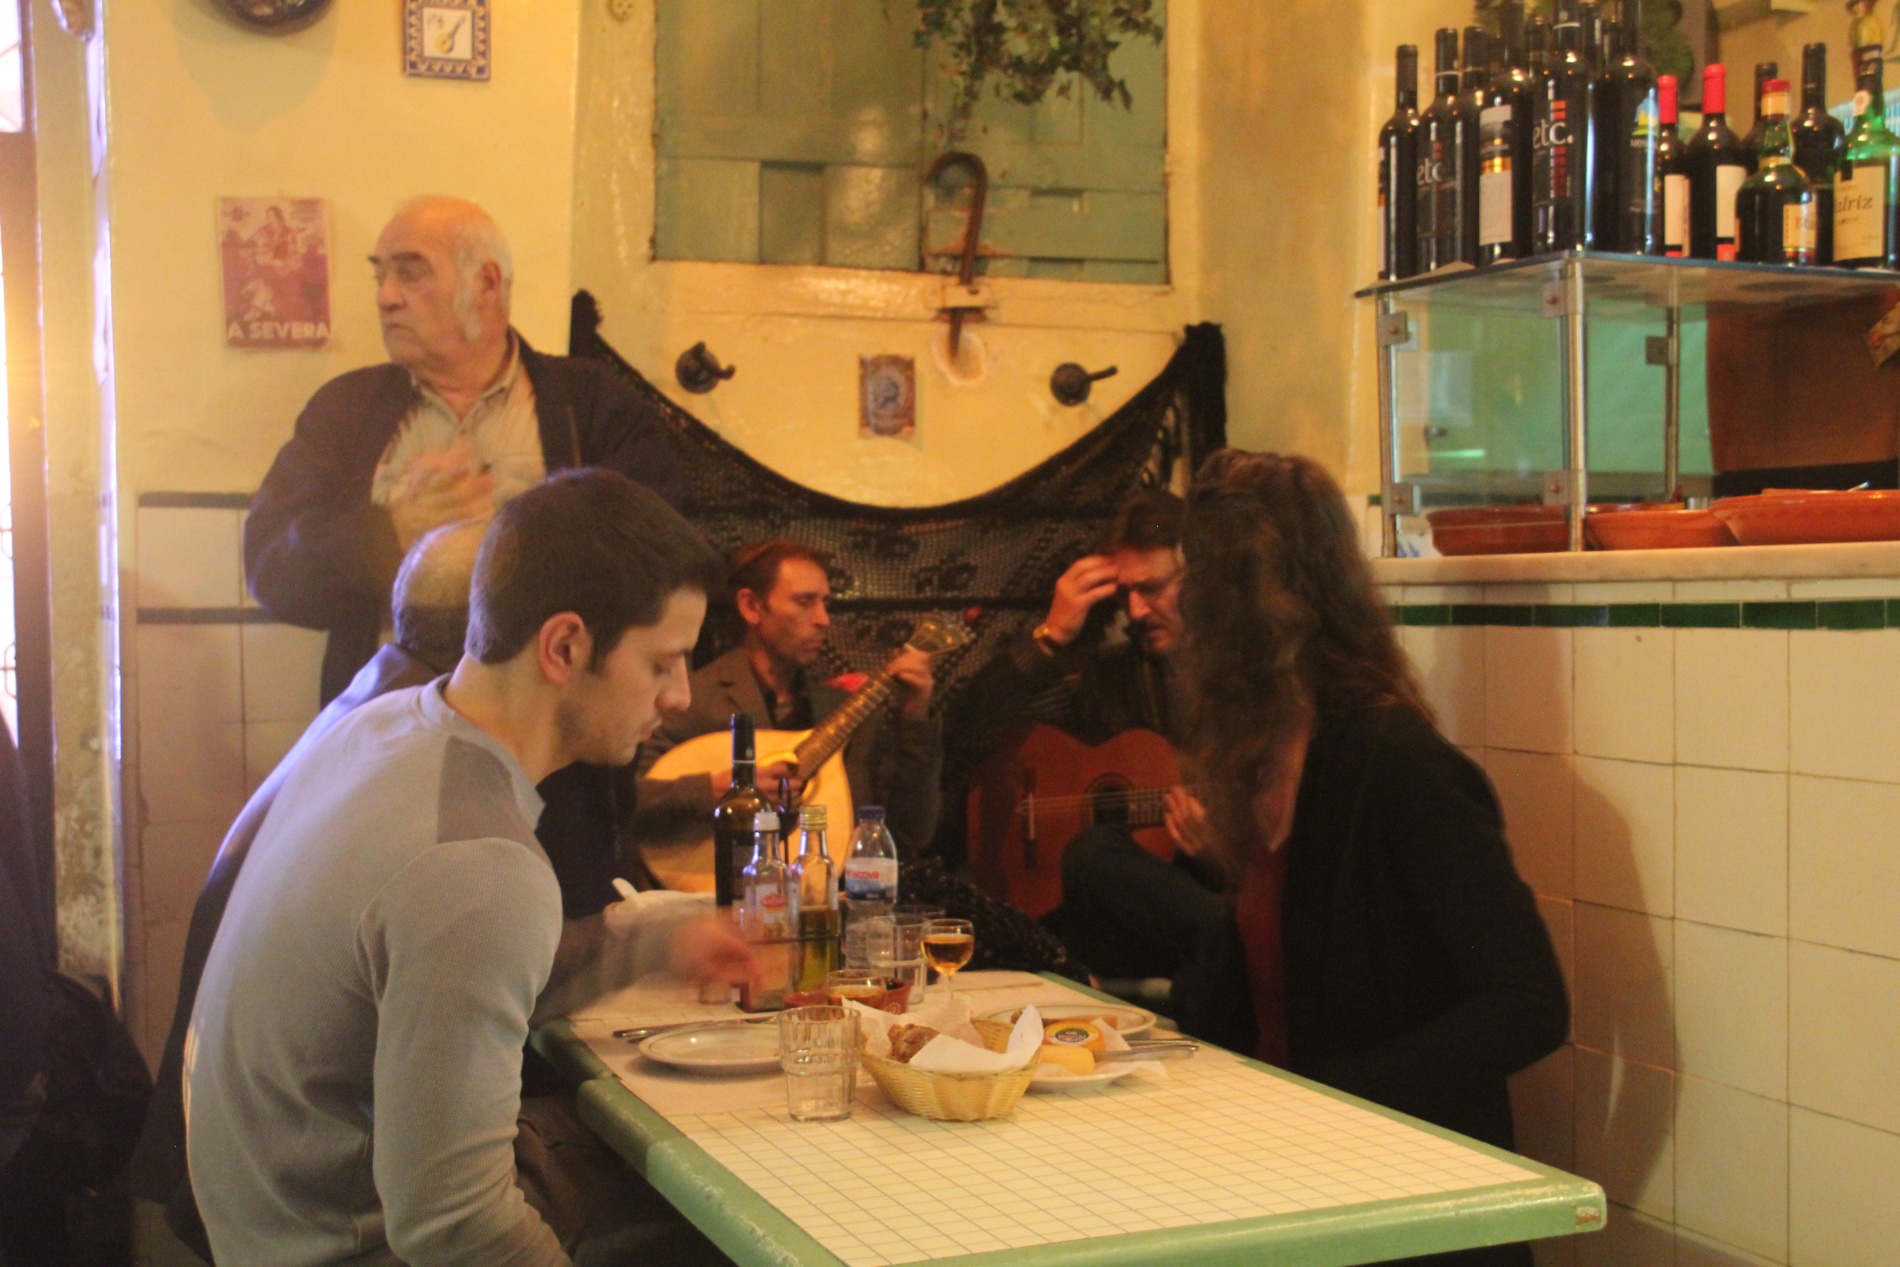 Fado musicians perform in the A Baiuca restaurant in Lisbon's Alfama.